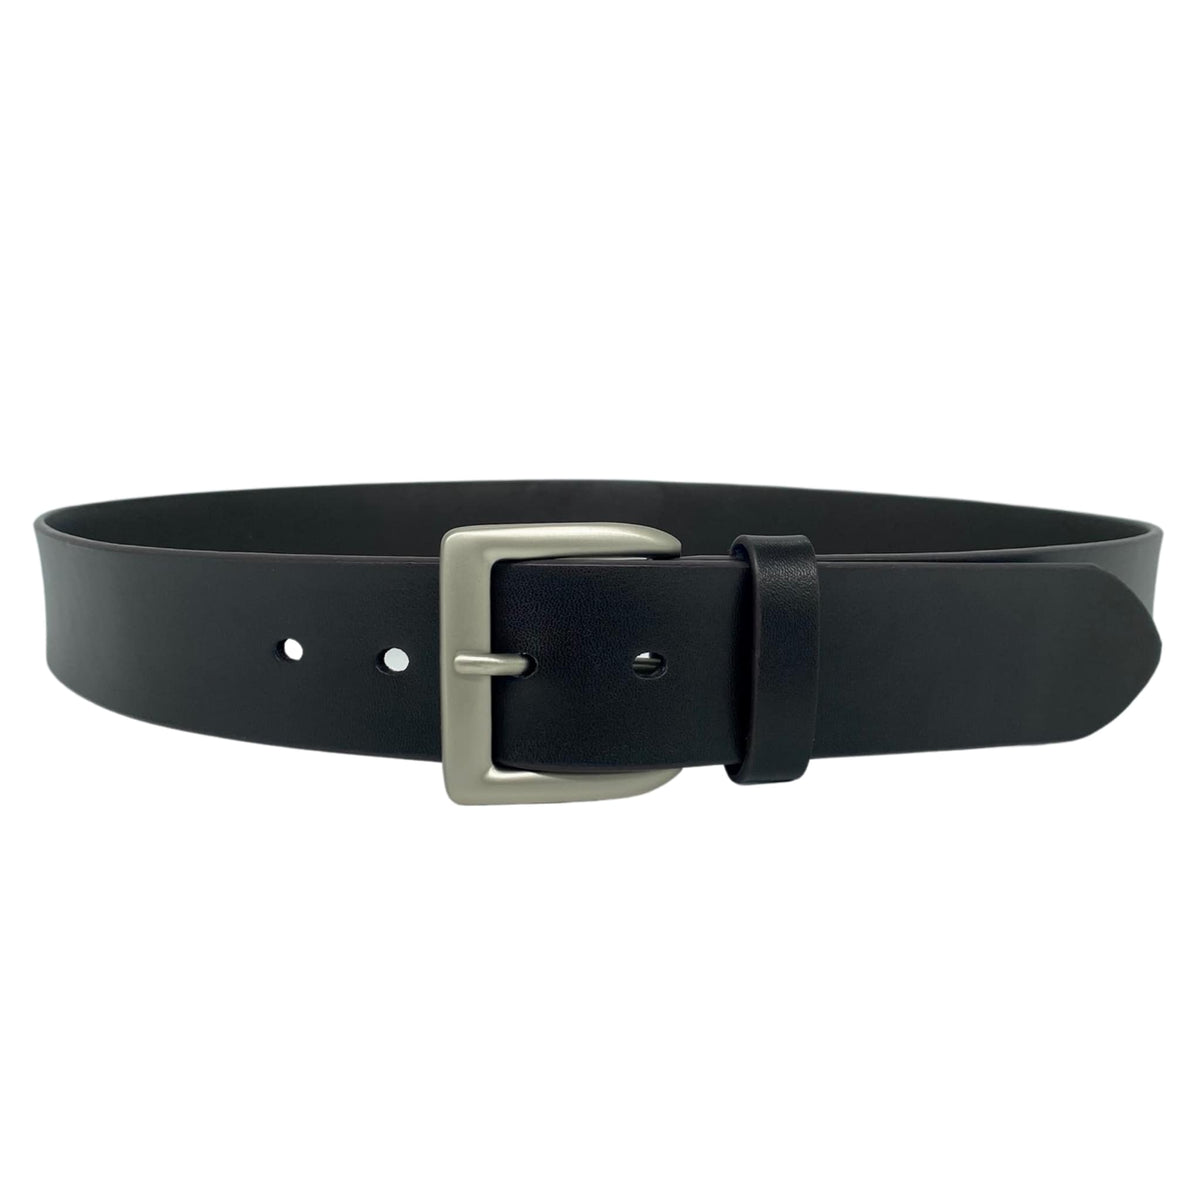 MARK - Men's Brown Belt - Genuine Leather Belt - BeltnBags